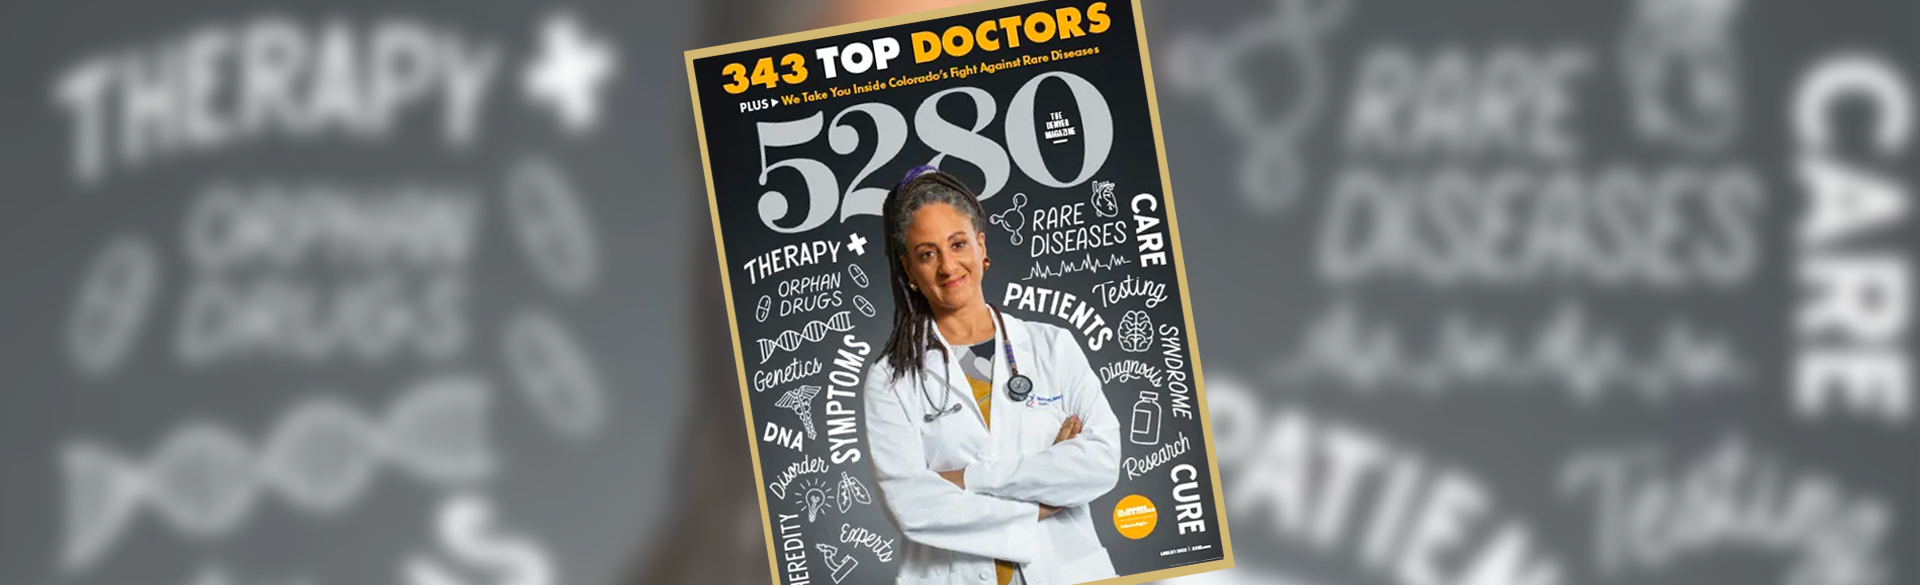 CU School of Medicine faculty members were ranked among the best on Denver-area magazine 5280 top doctors list. 